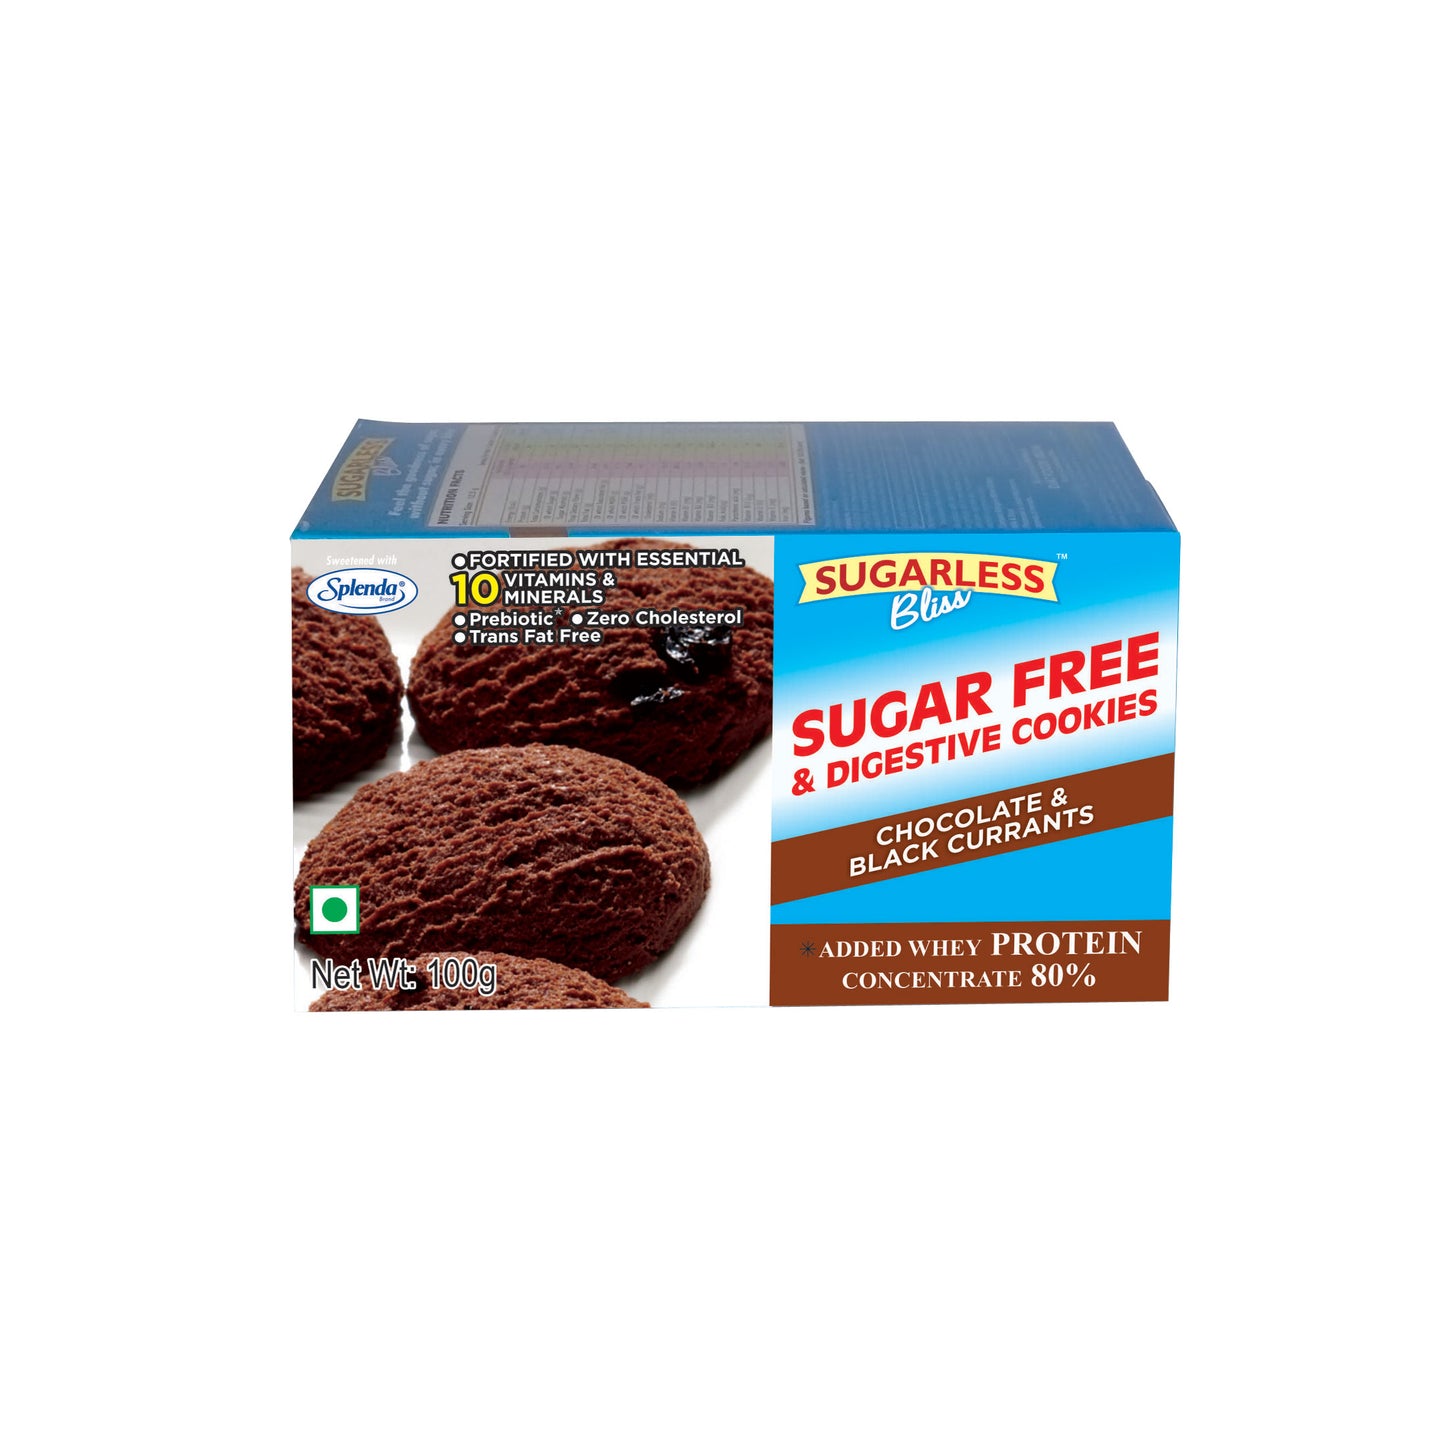 Sugar Free & Digestive Cookies - Chocolate & Black Currant (100gms)